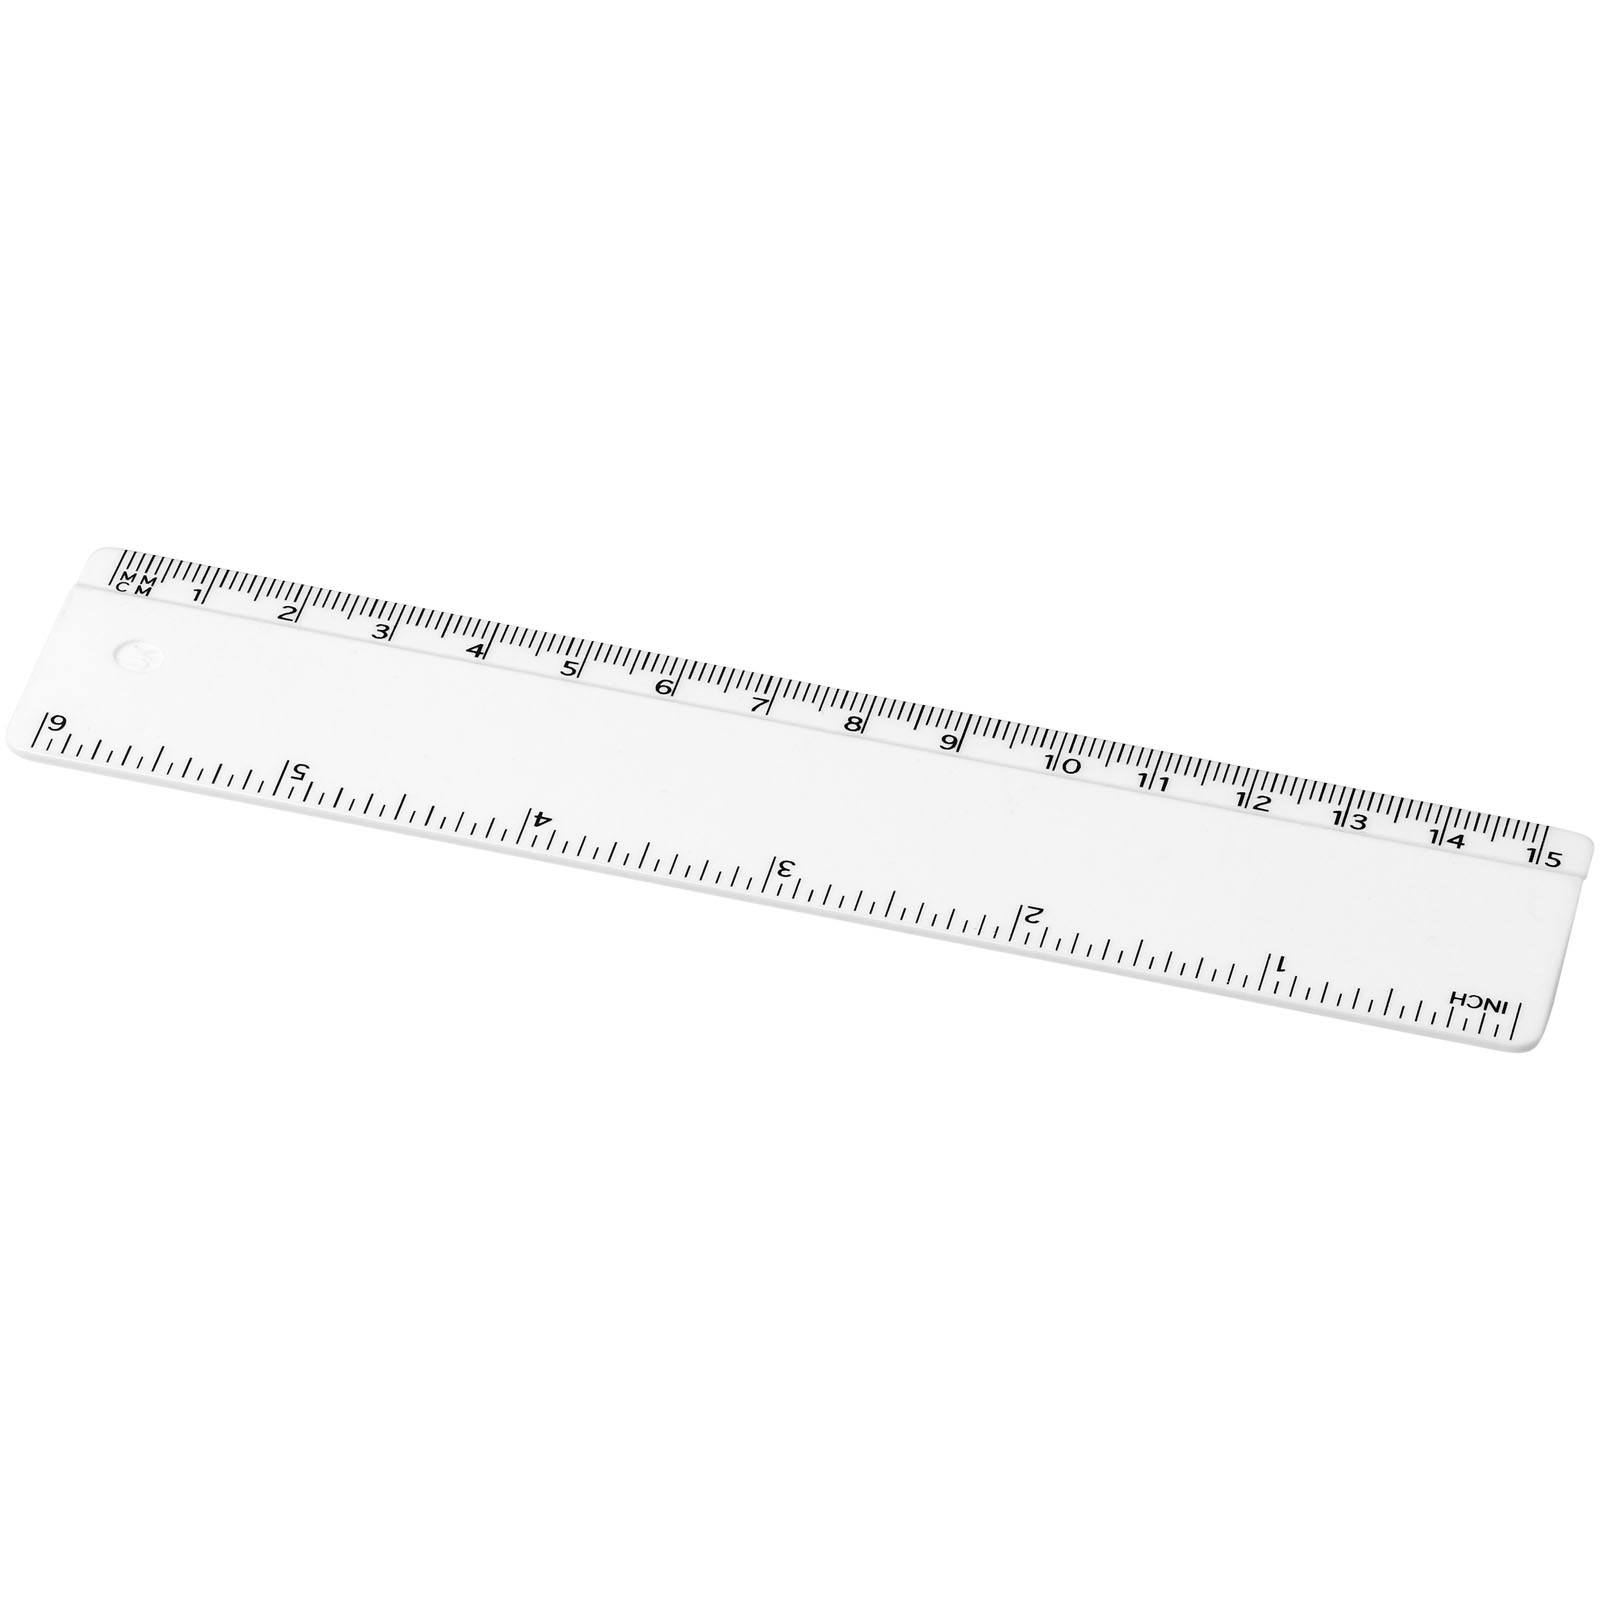 Advertising Desk Accessories - Refari 15 cm recycled plastic ruler - 0